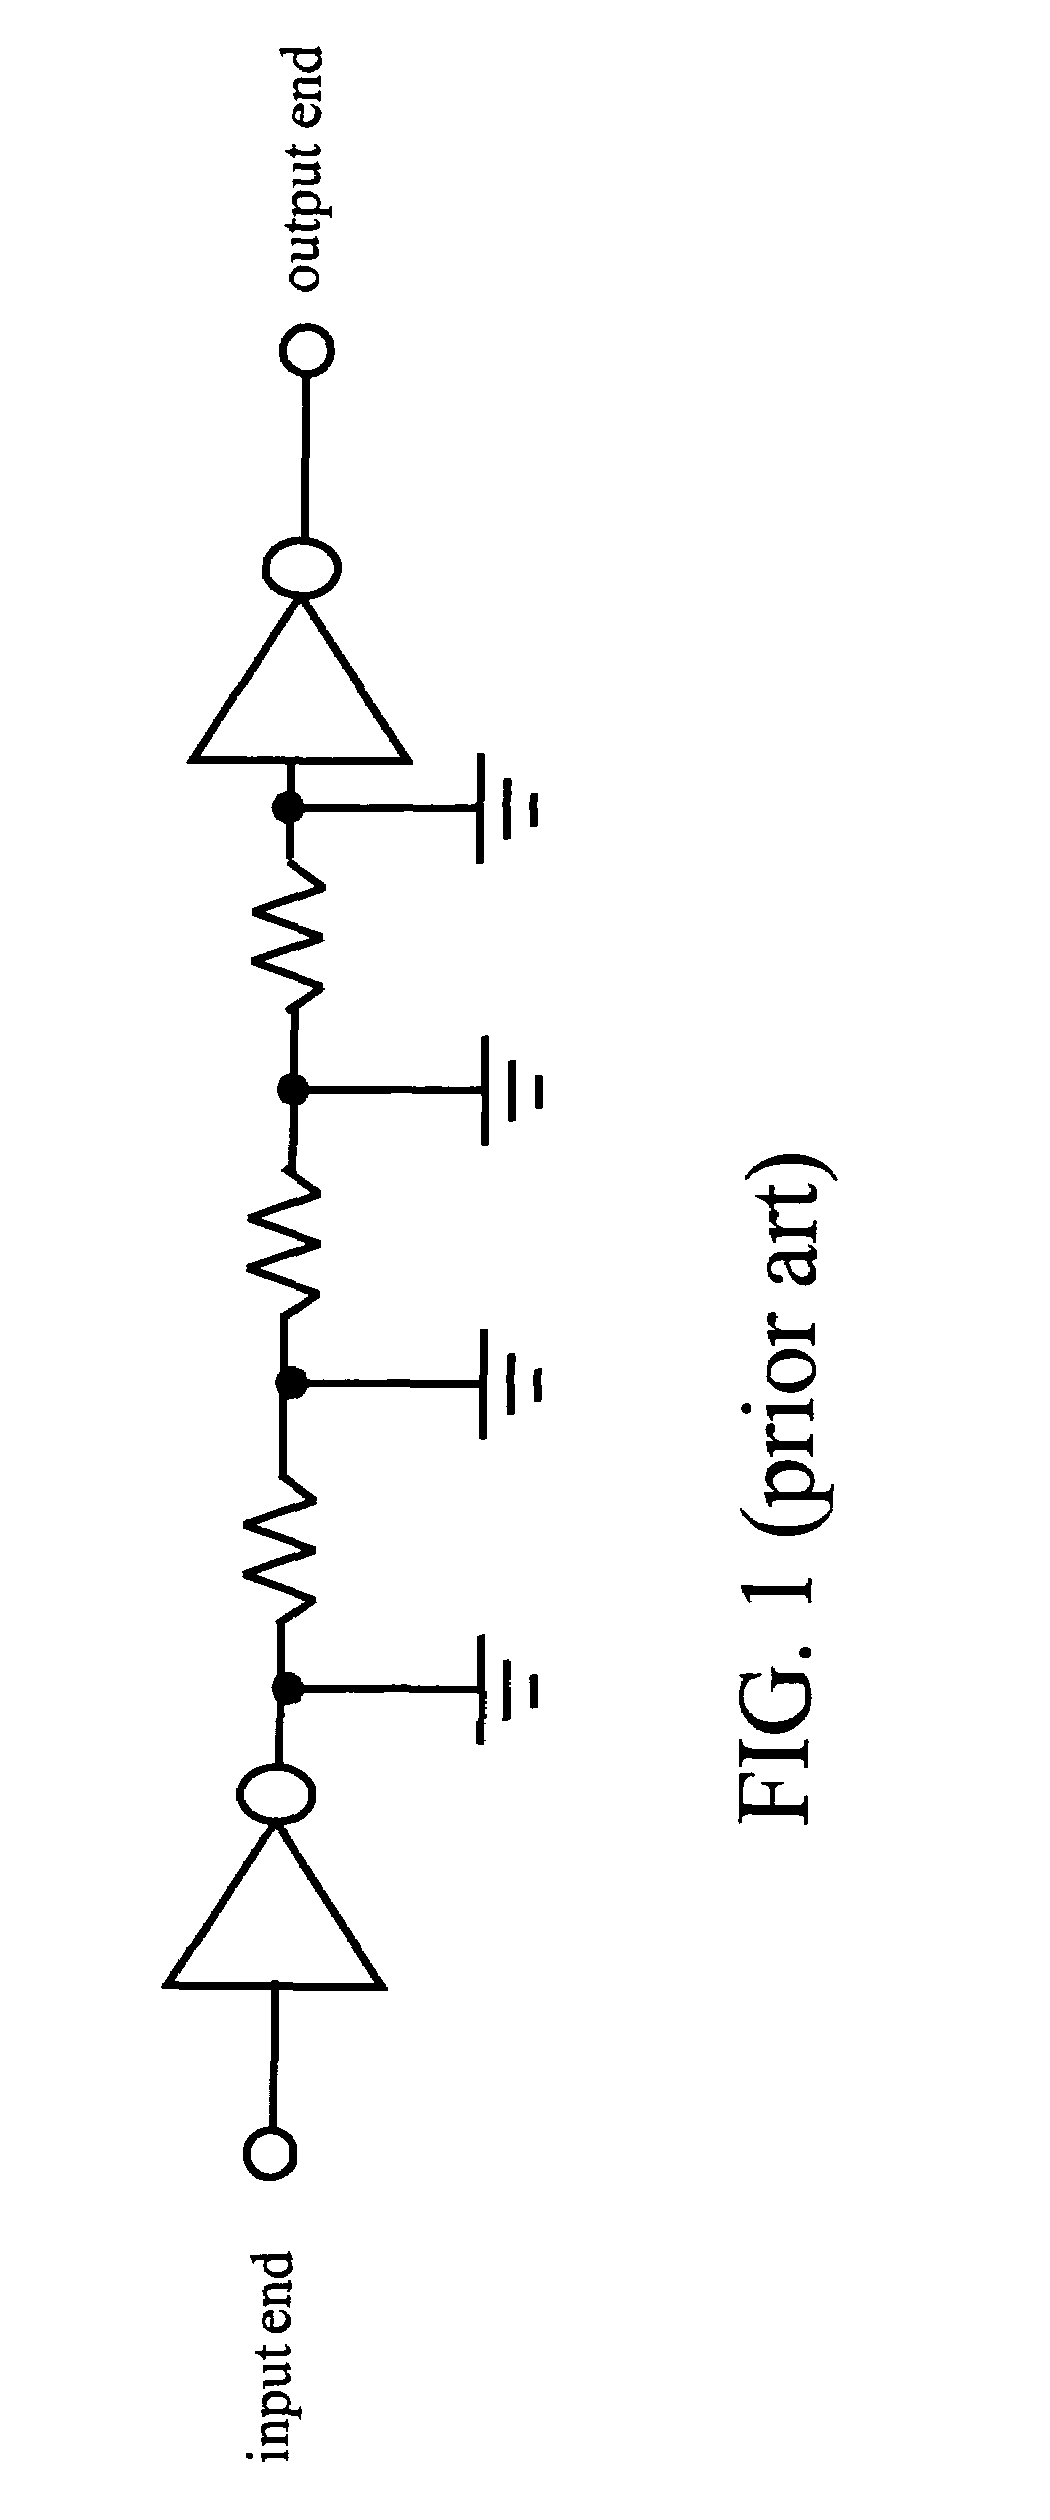 Bidirectional current-mode transceiver